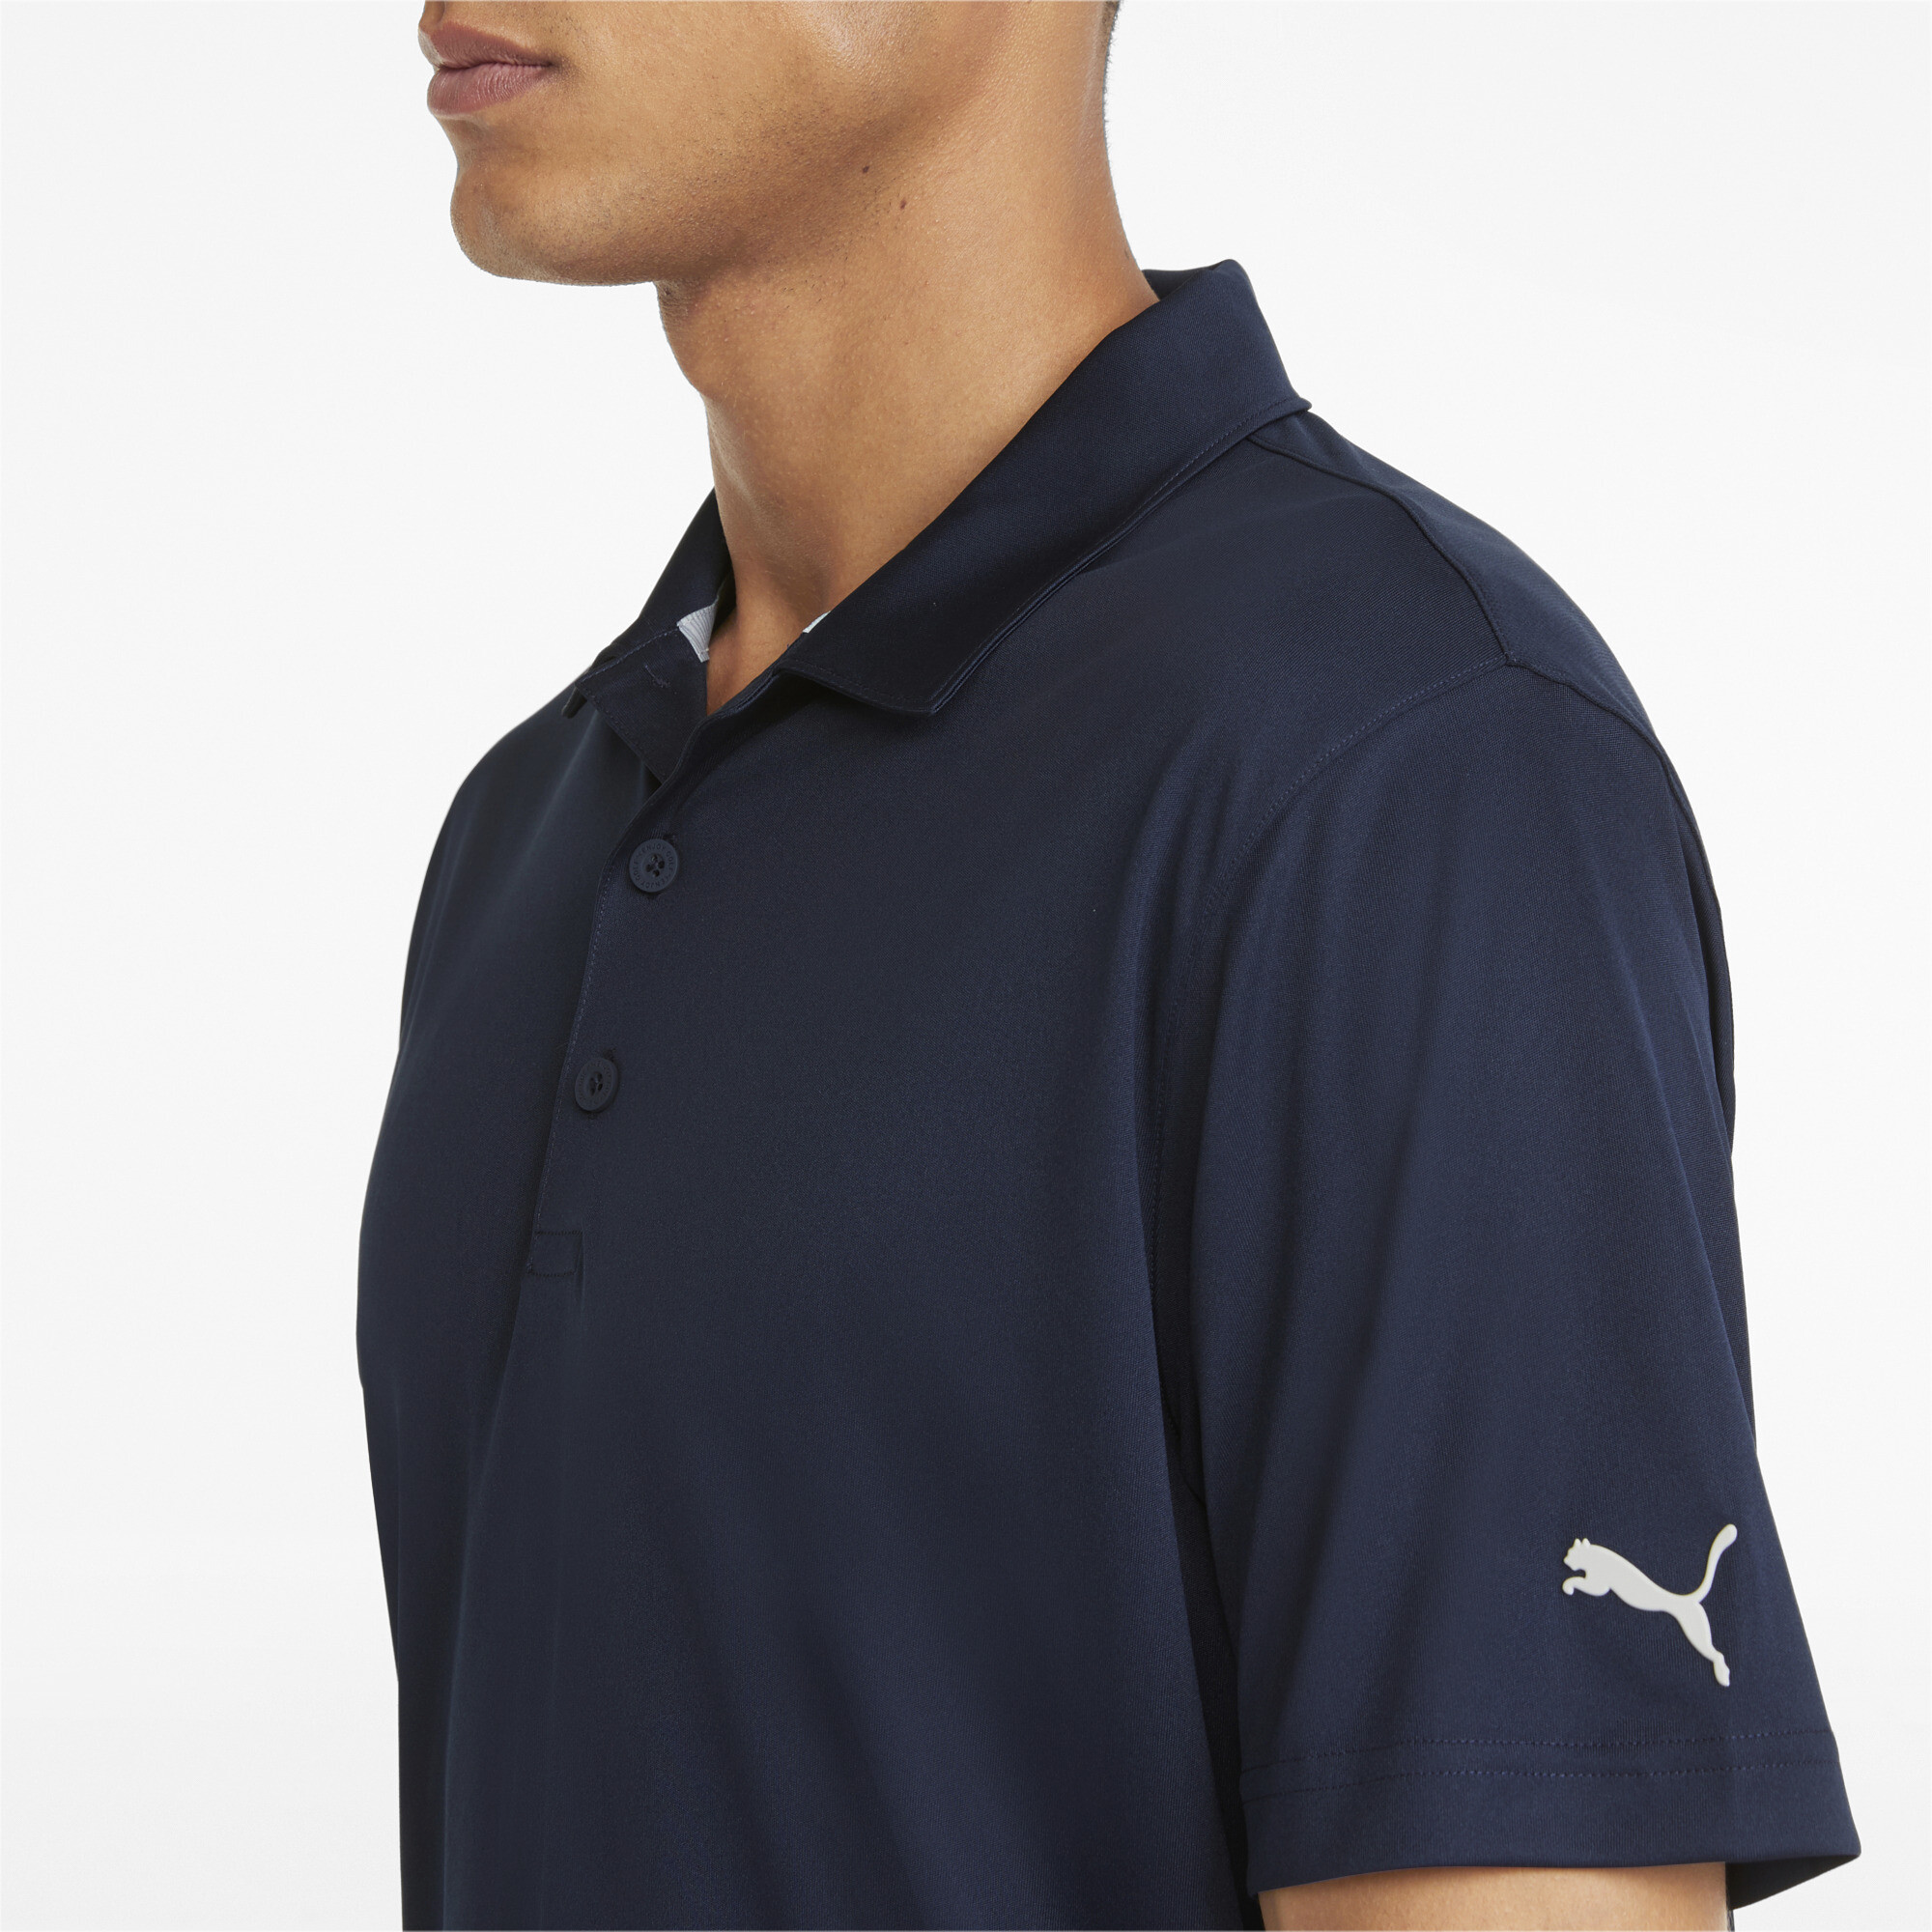 Men's Puma Gamer's Golf Polo Shirt T-Shirt, Blue T-Shirt, Size 5XL T-Shirt, Clothing